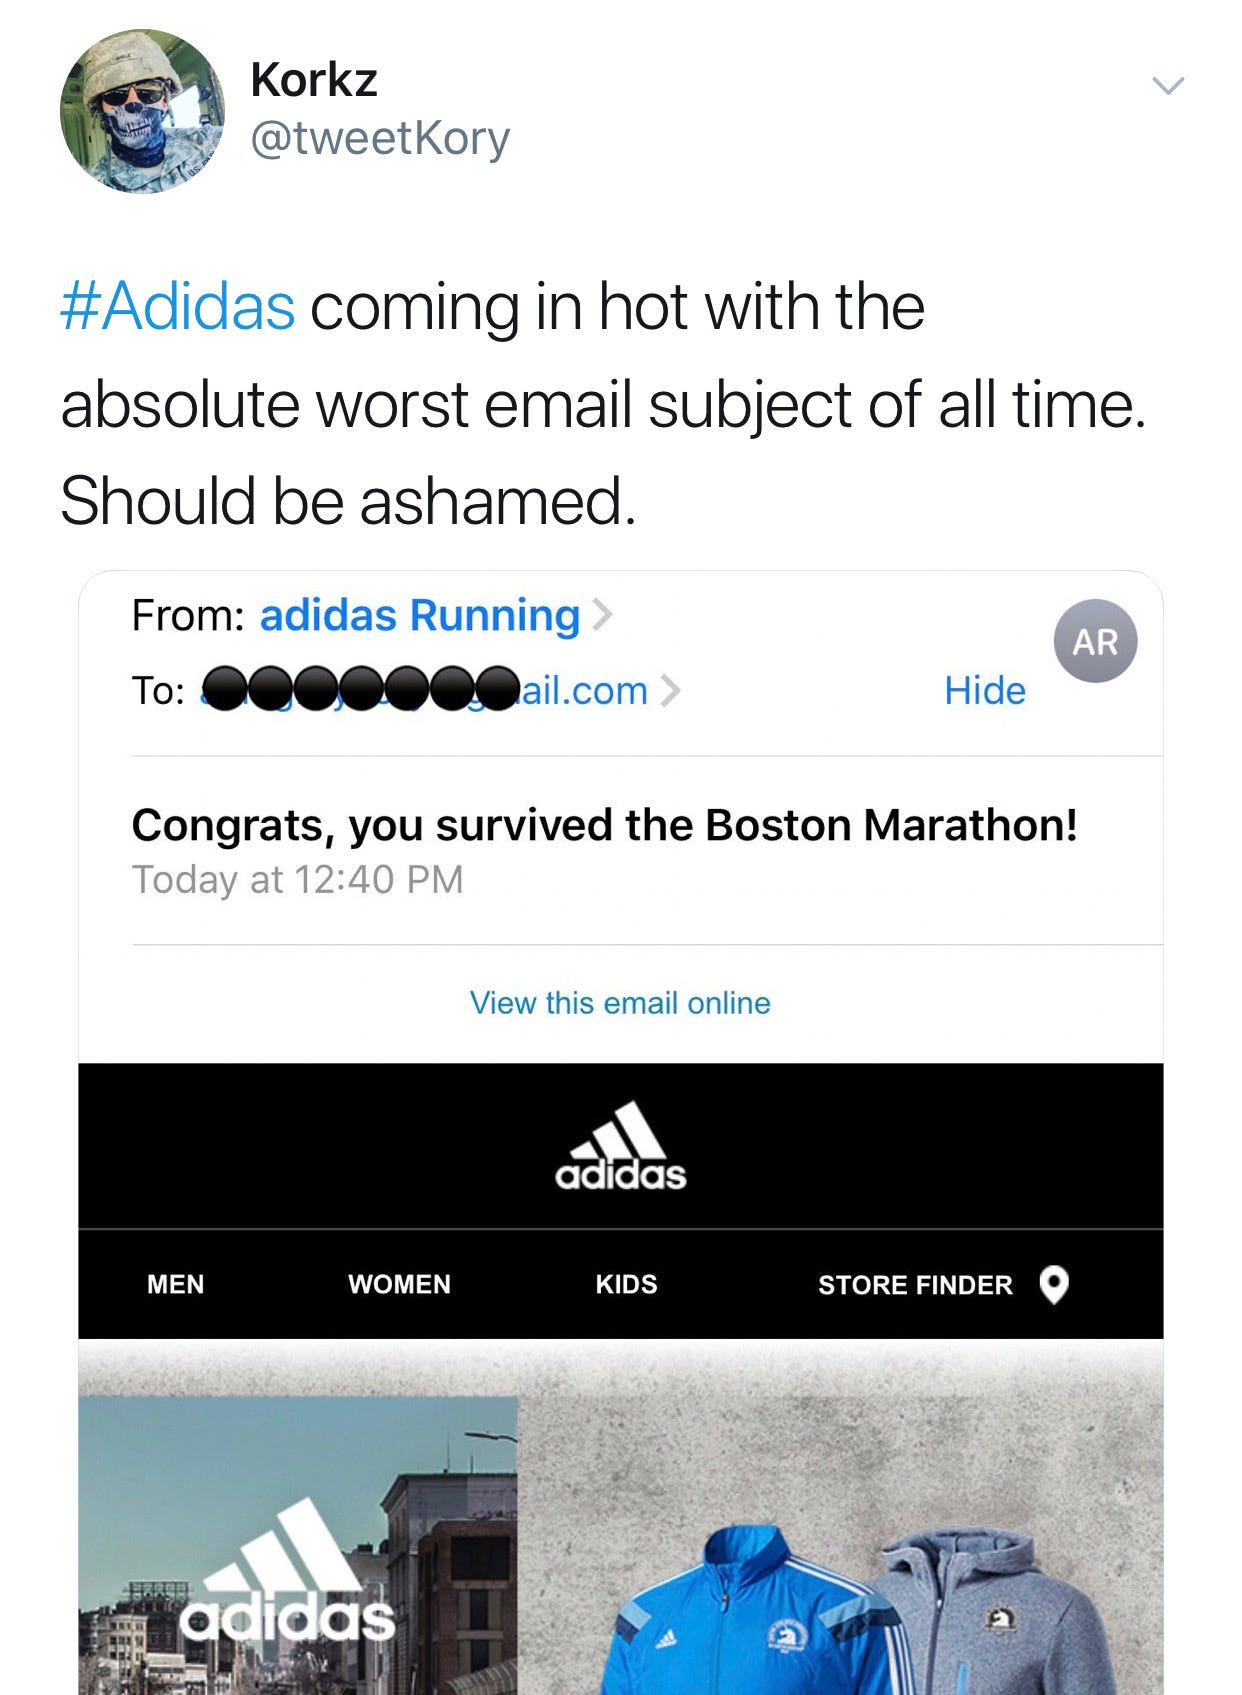 Adidas' Boston Marathon Congratulatory Email Causes Major Backlash | by  Claudia Witczak | Medium